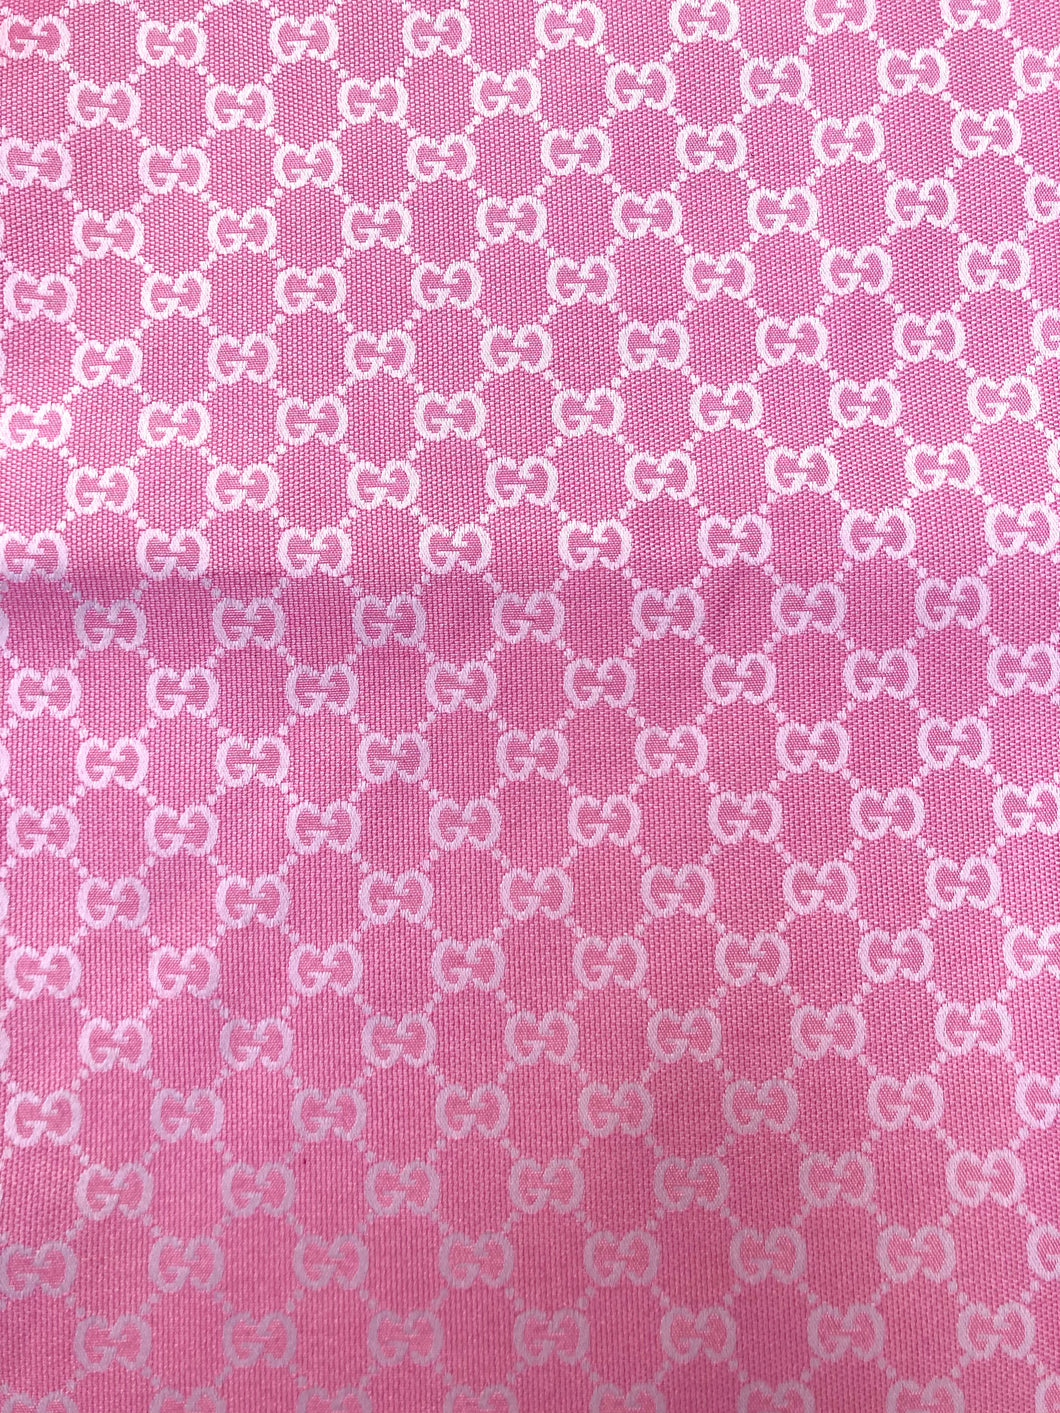 Barbie Pink GG Gucci Fabric for Custom DIY Handmade